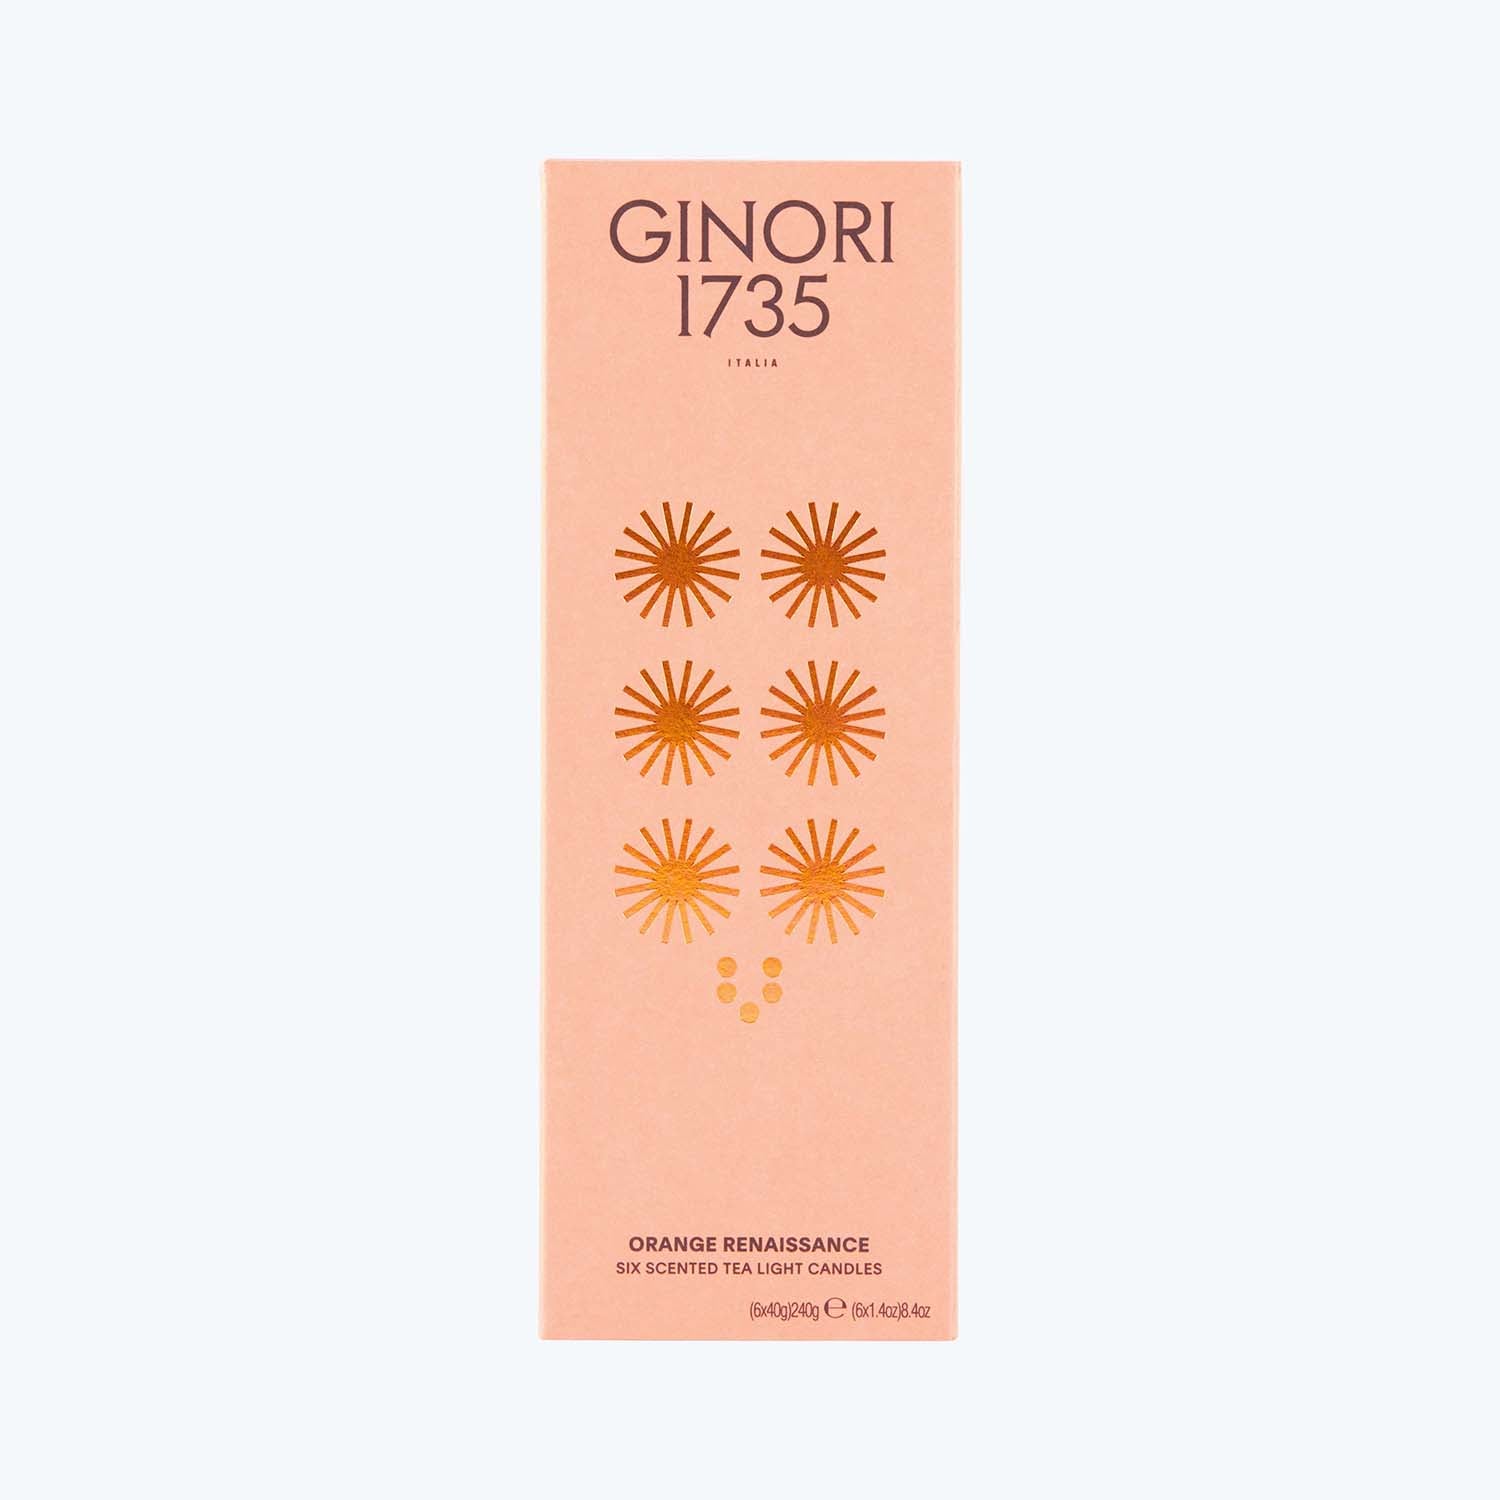 Elegant packaging from Ginori 1735 Italia featuring orange Renaissance tea lights